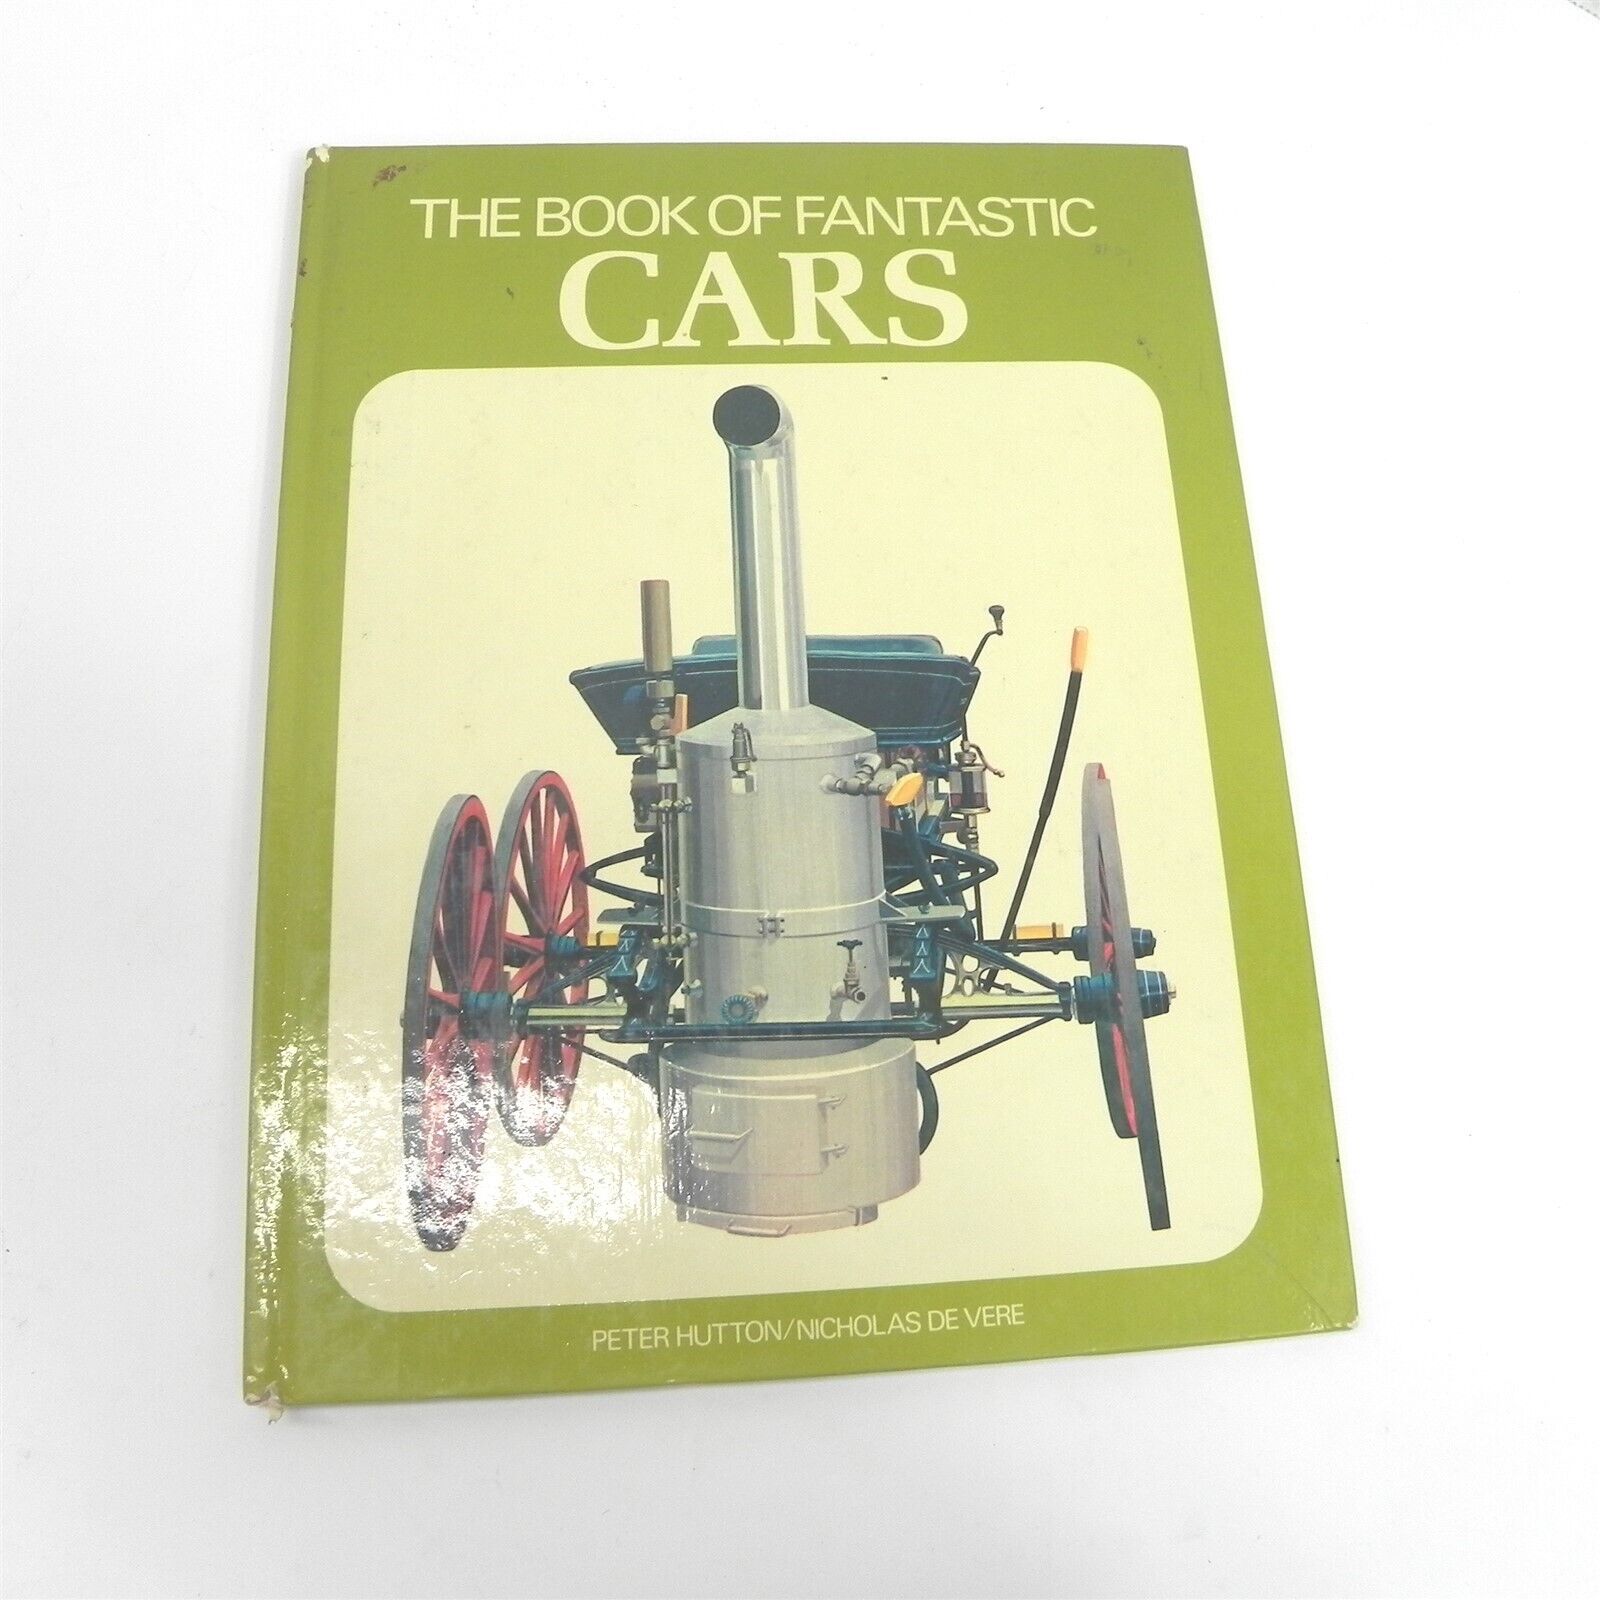 VINTAGE 1974 THE BOOK OF FANTASTIC CARS HARDCOVER PETER HUTTON NICHOLAS DE VERE